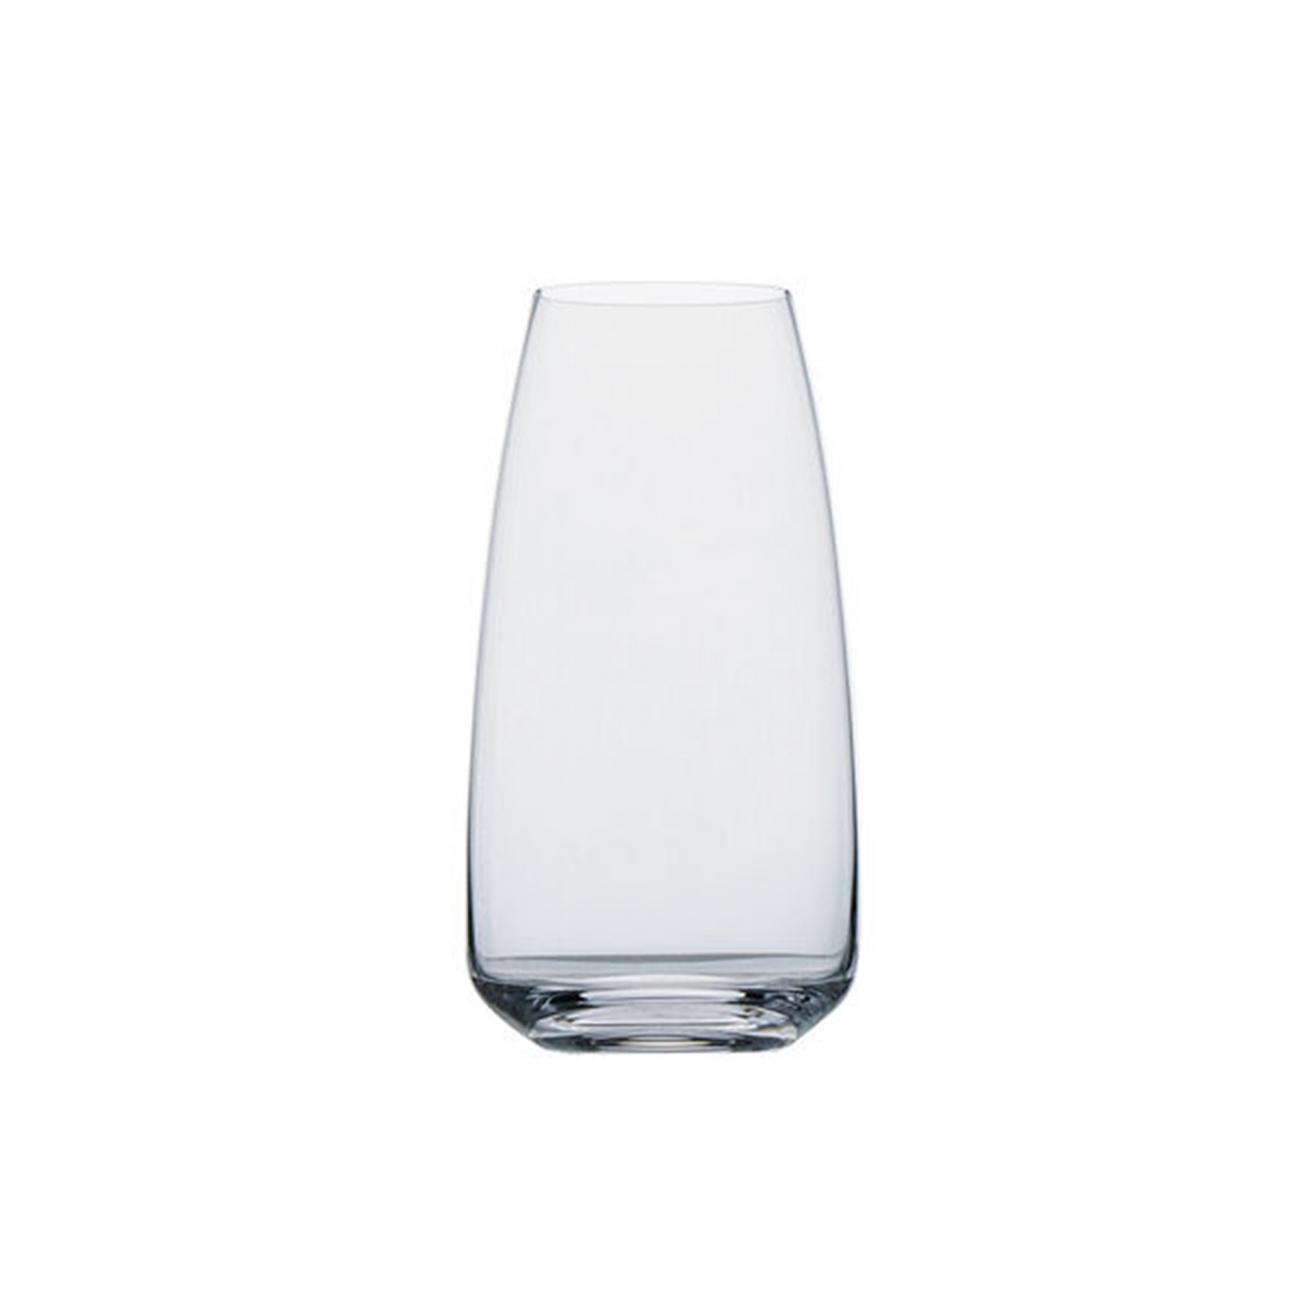 Rosenthal Tac Juice glass